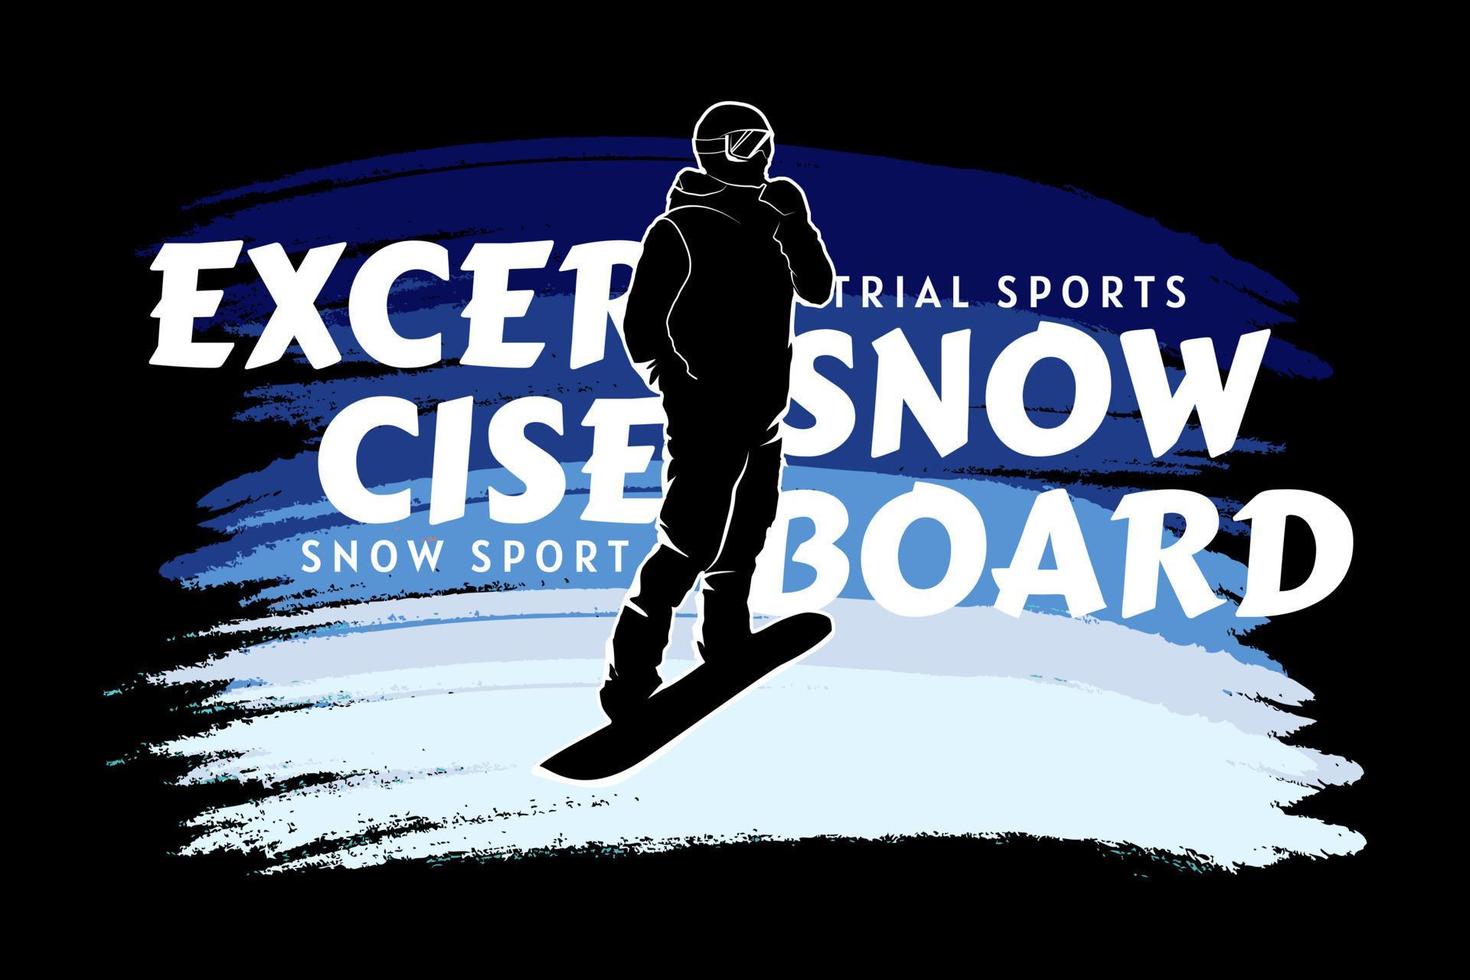 exercício snowboard silhueta design retro vetor